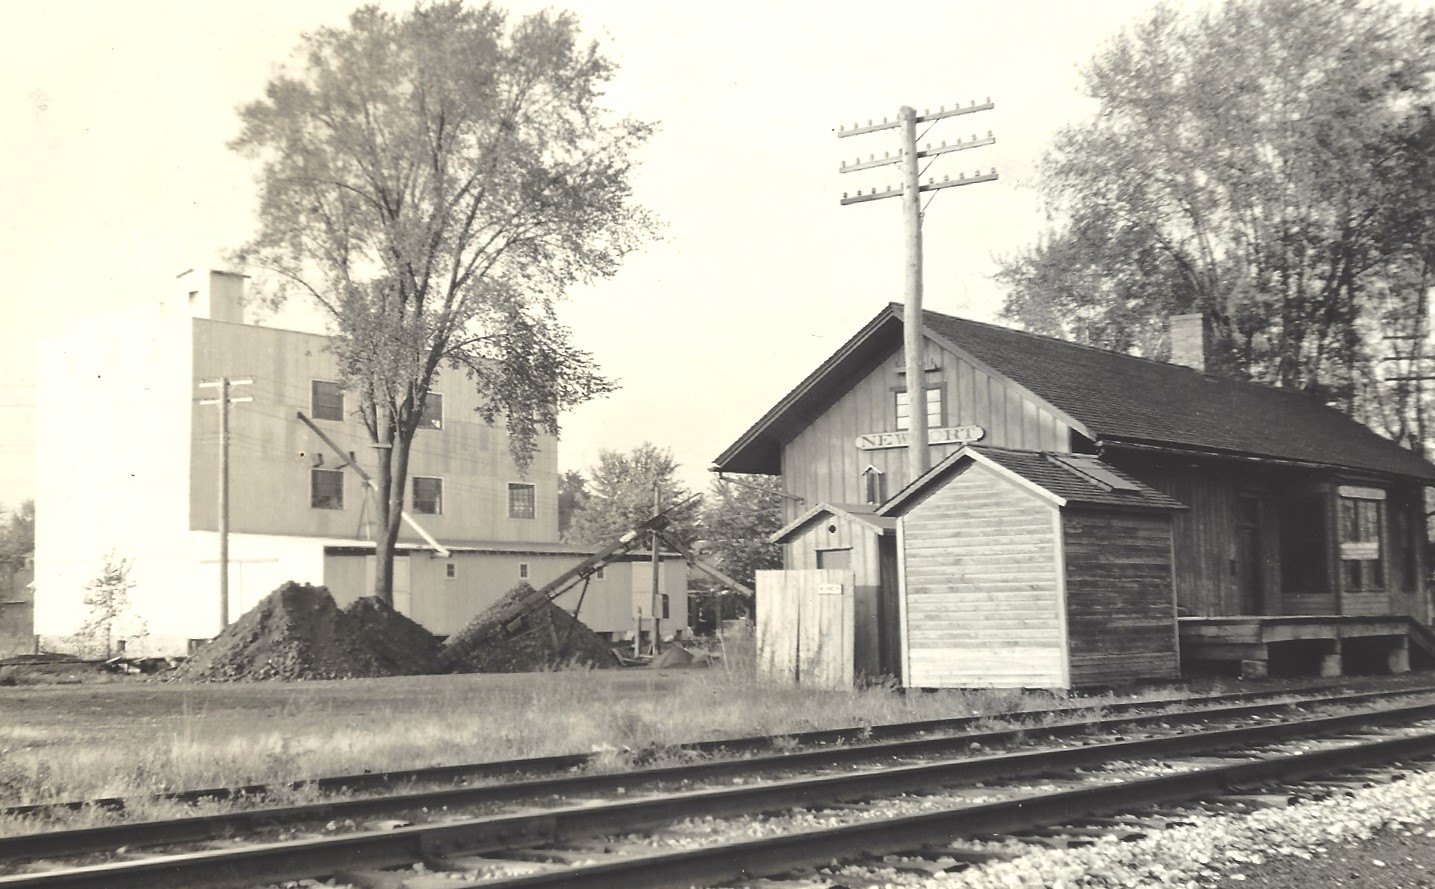 Newport Depot in 1936